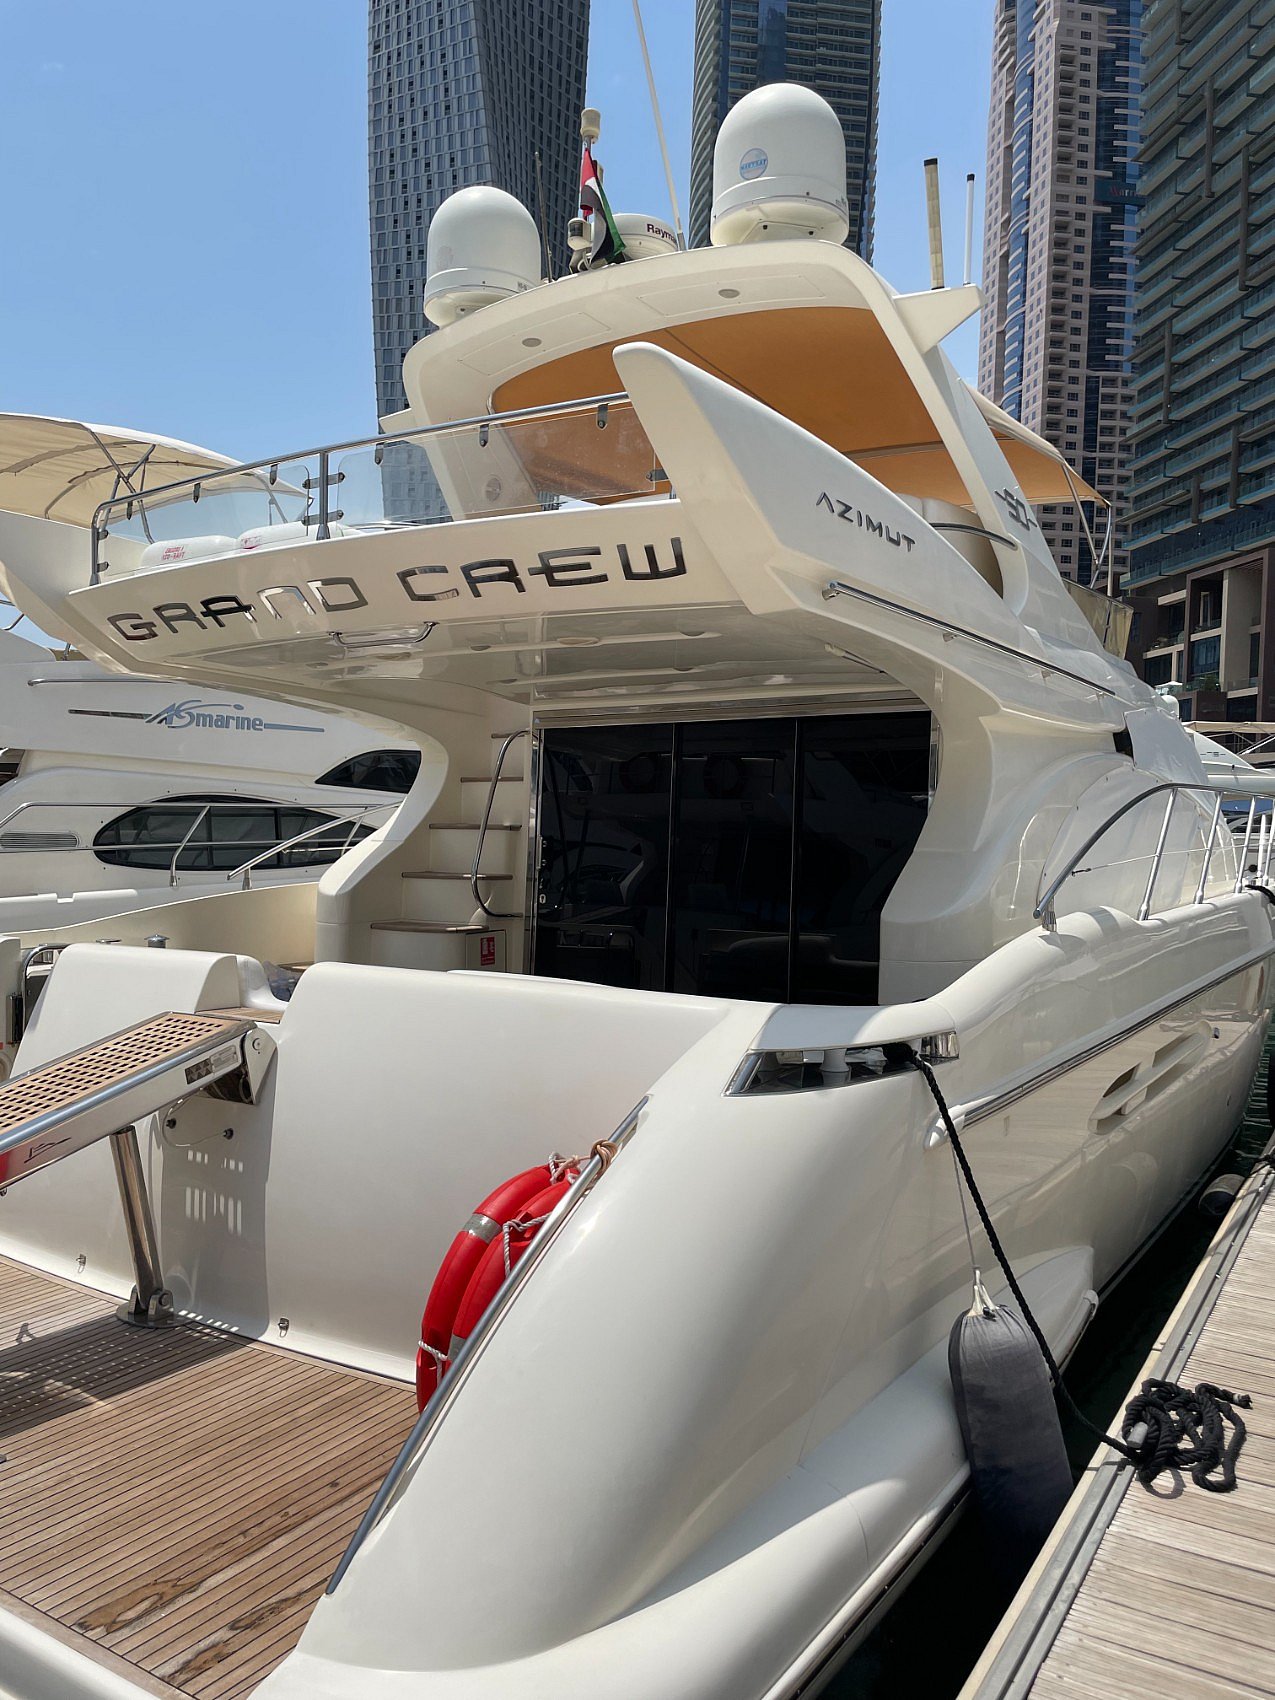 Grand Crew 50 ft in Dubai Marina for rent in Dubai 2